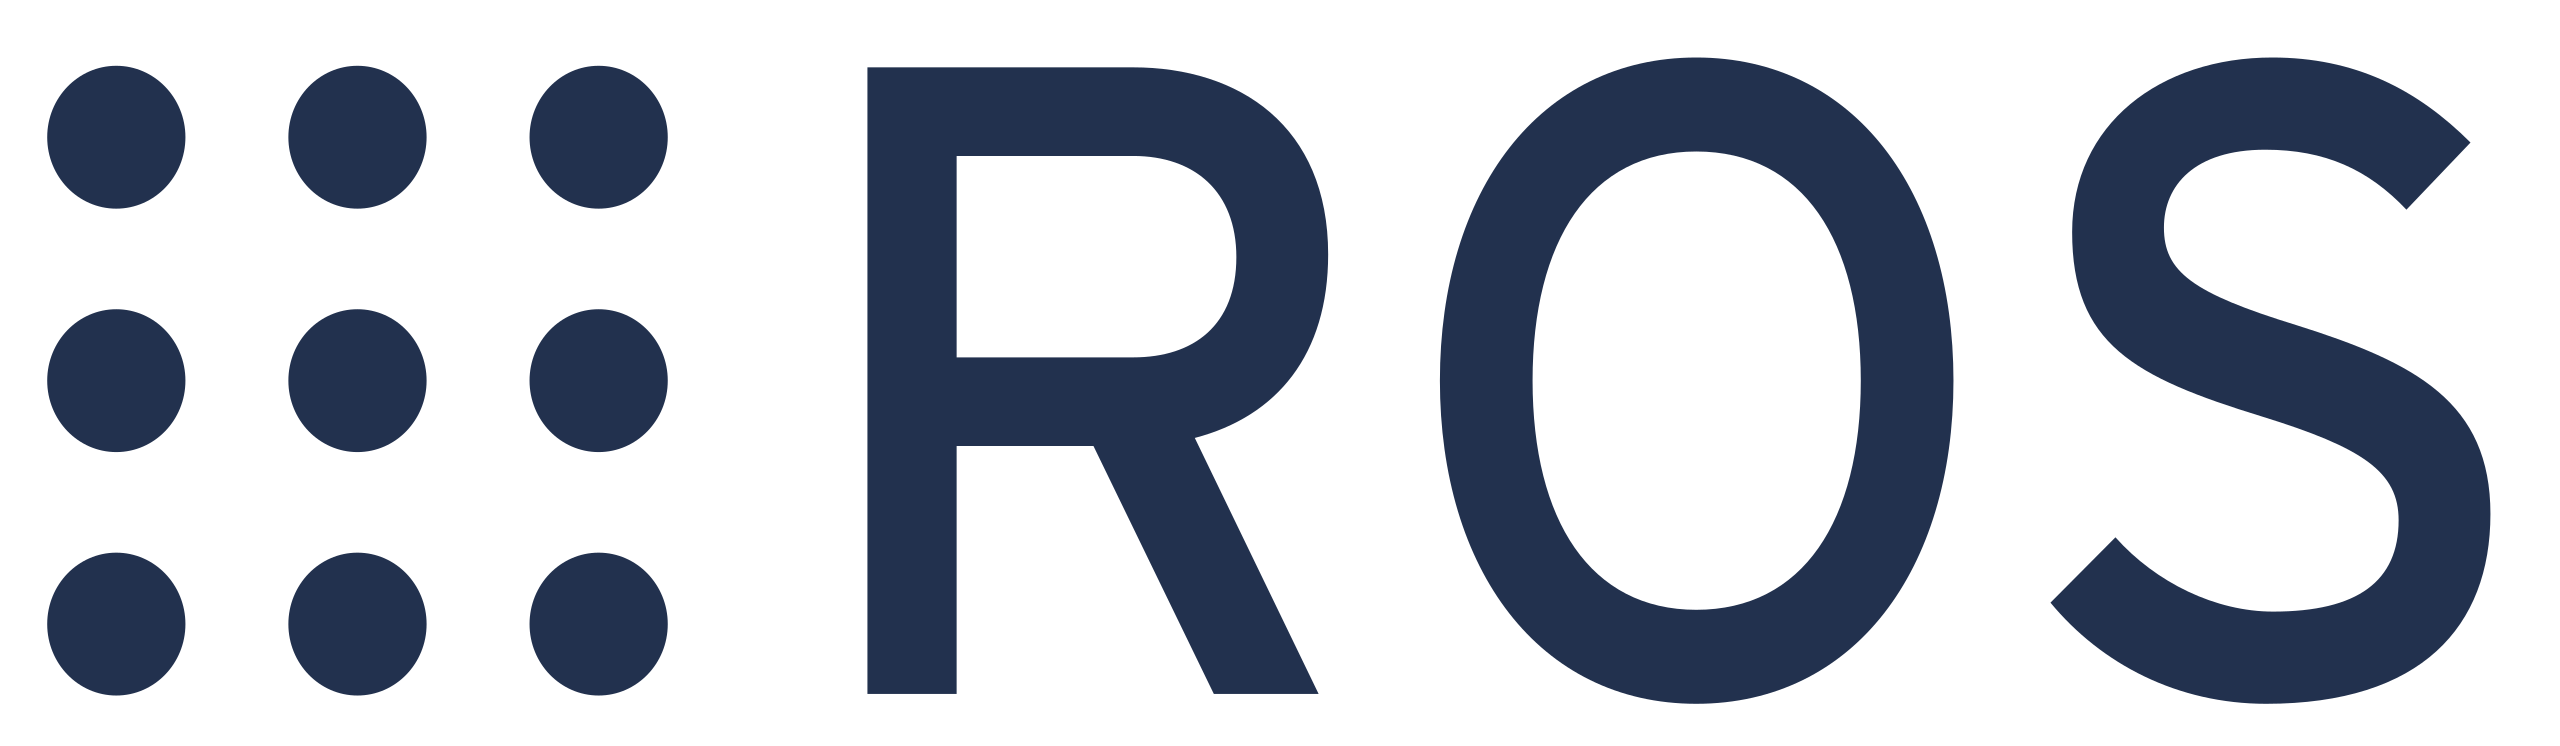 Ros_logo.svg